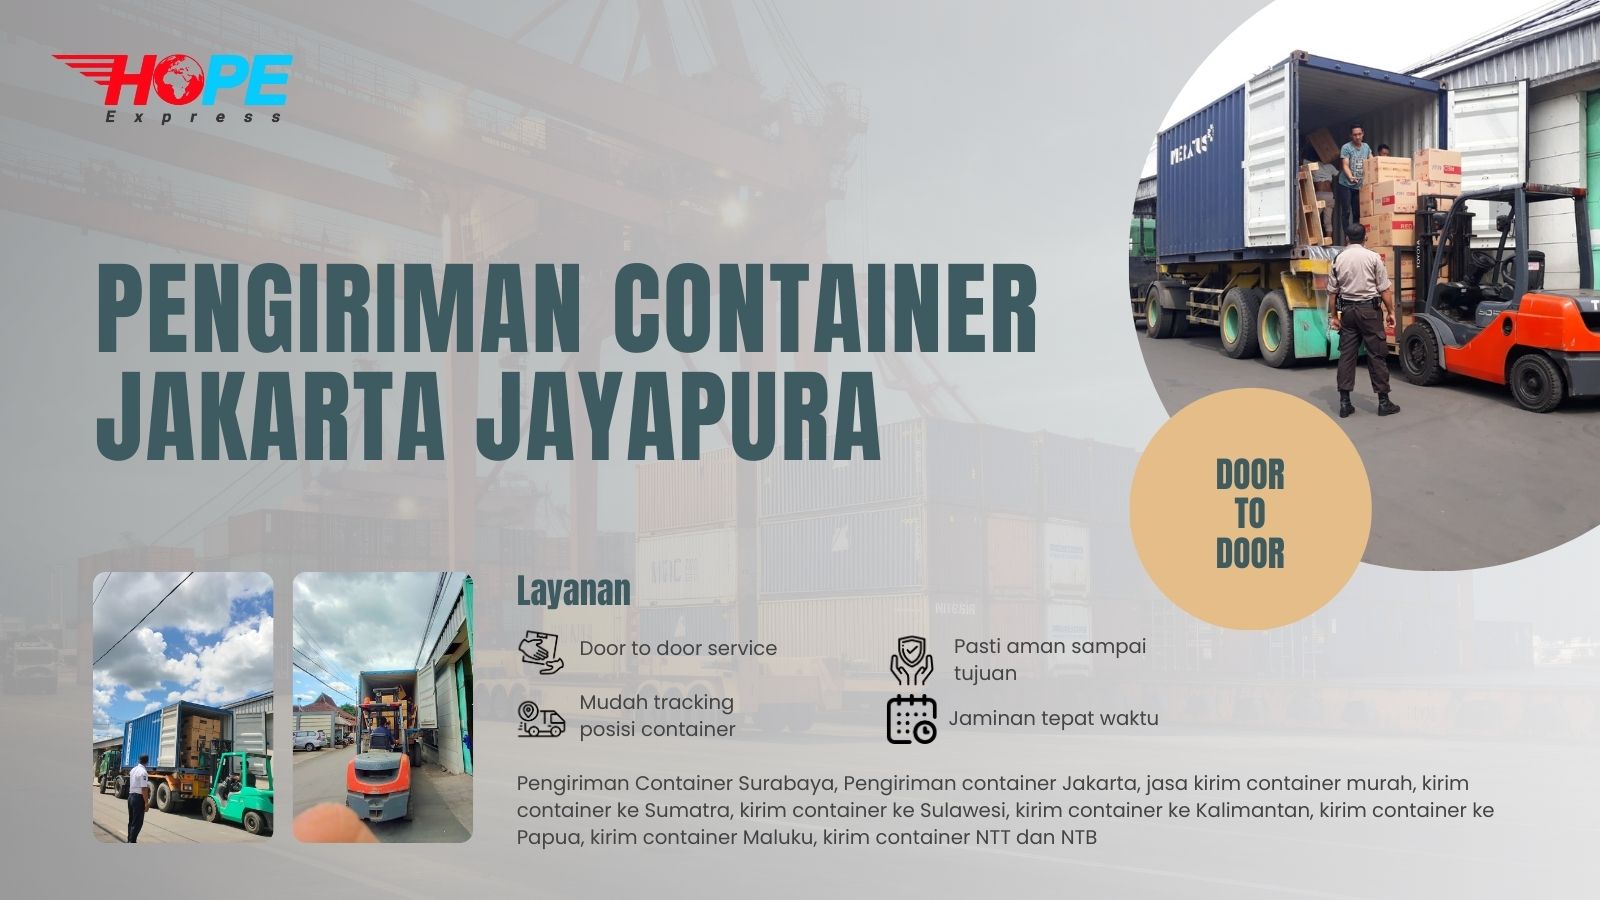 Pengiriman Container Jakarta Jayapura